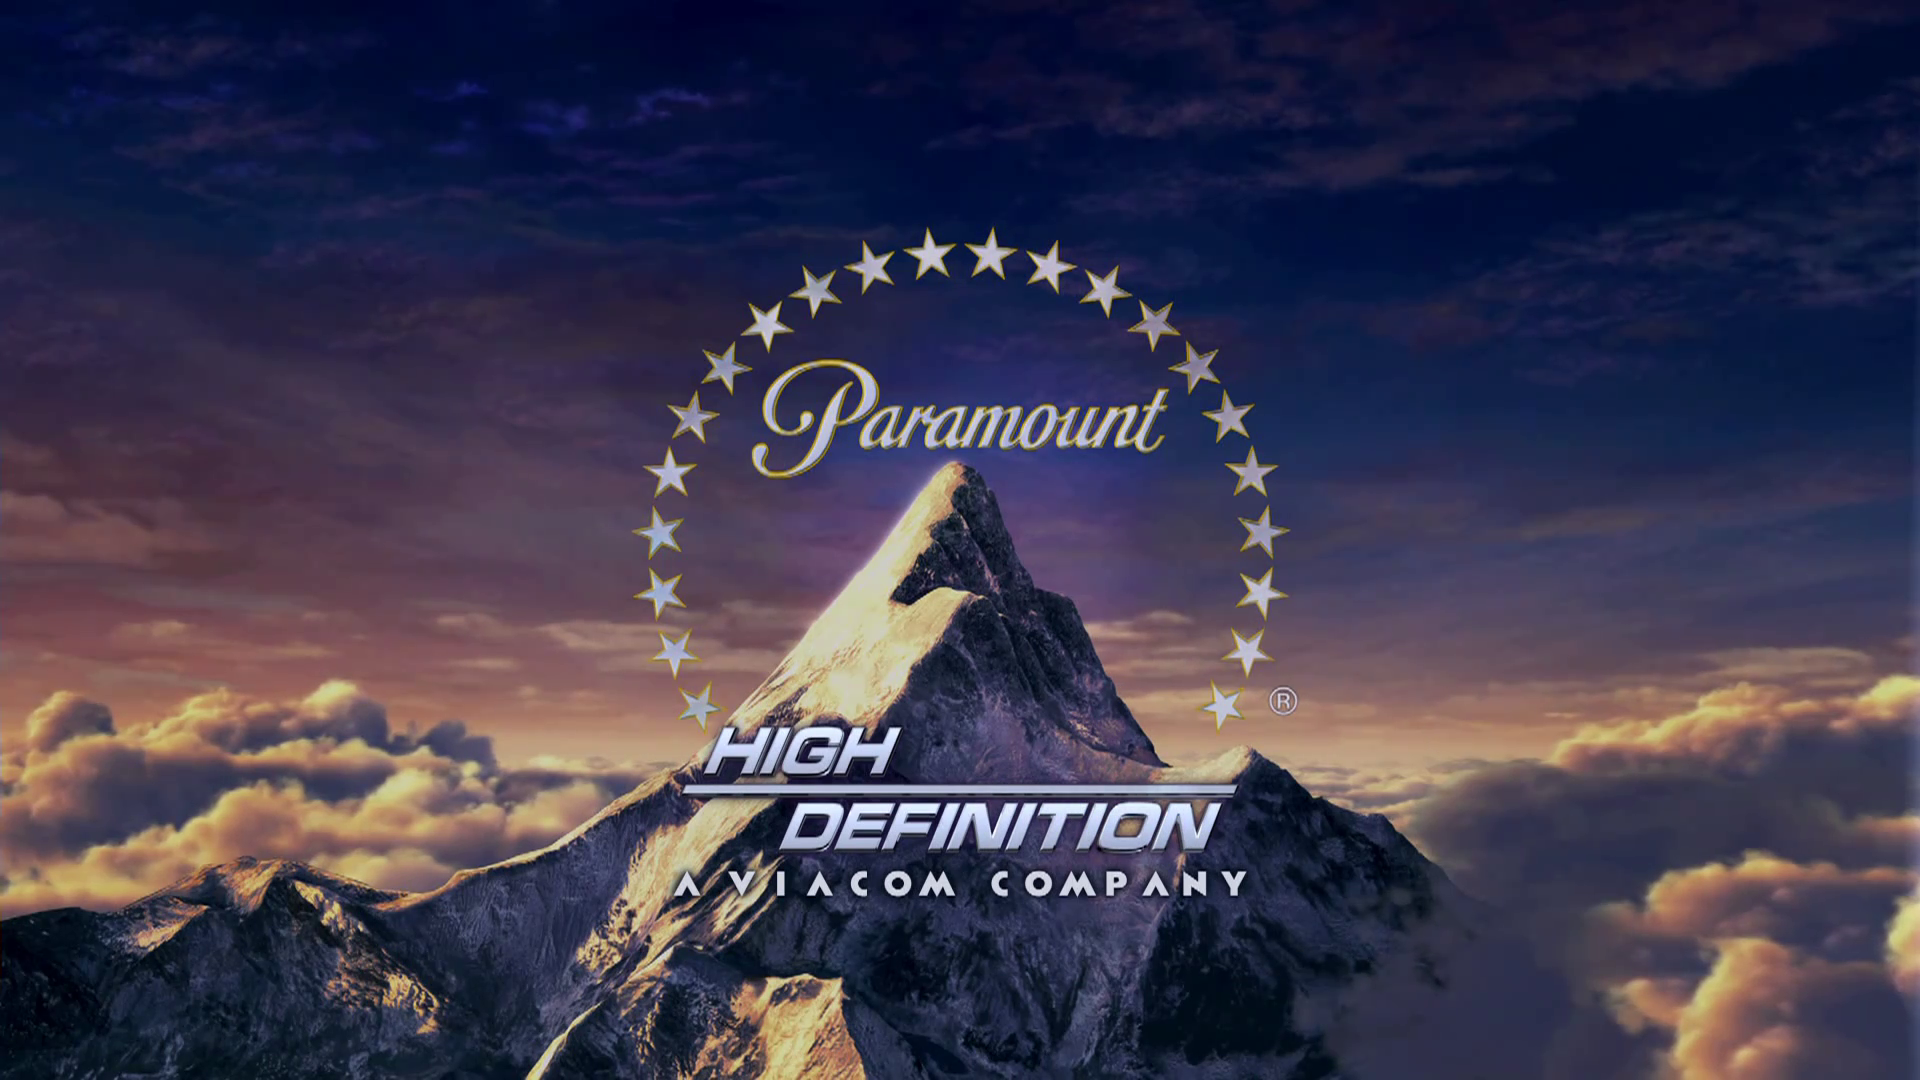 Hd video logo PNG image Download